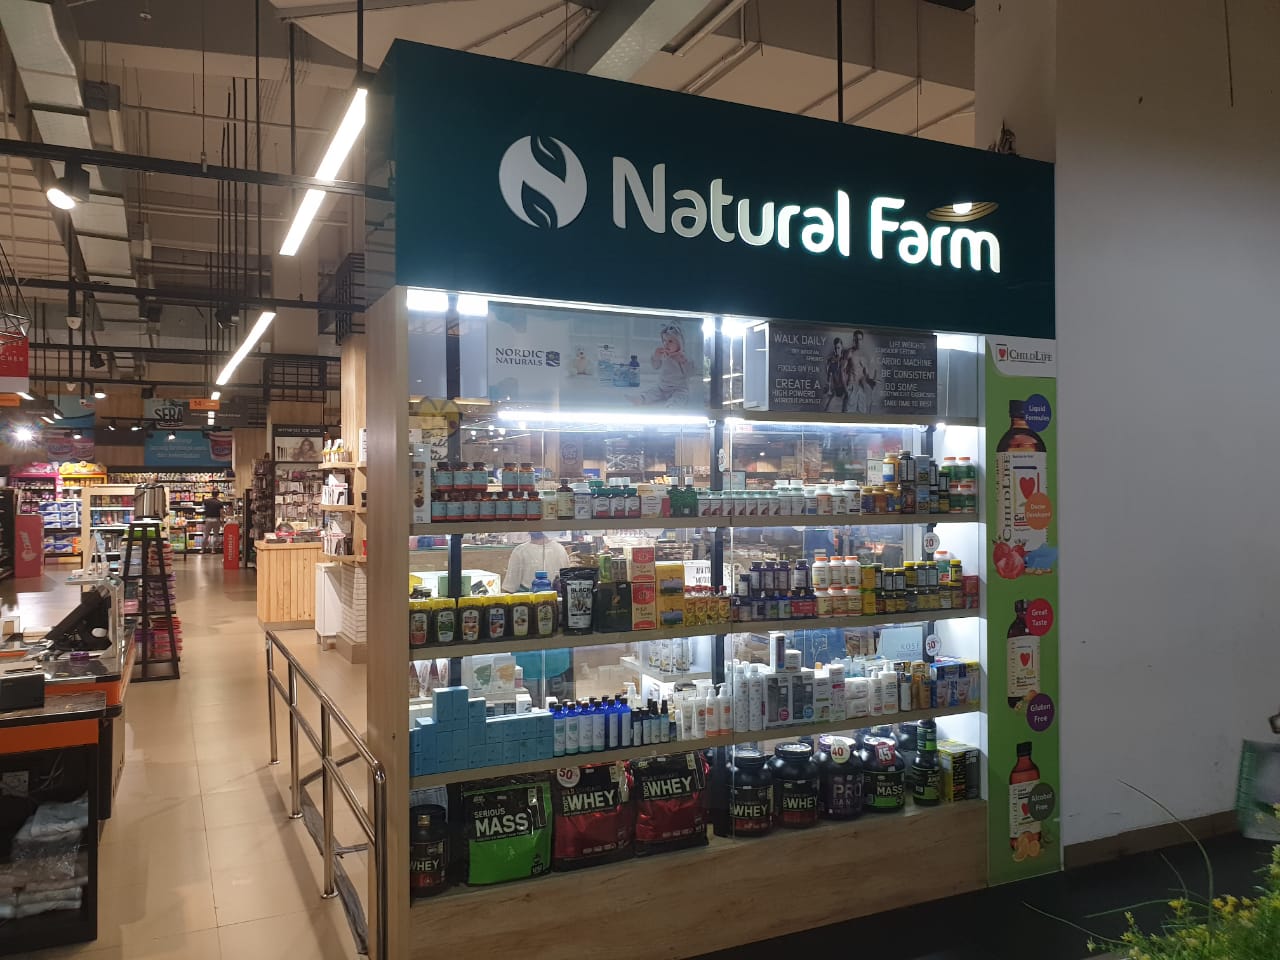 Natural Farms shop front in lippo mall puri st. moritz